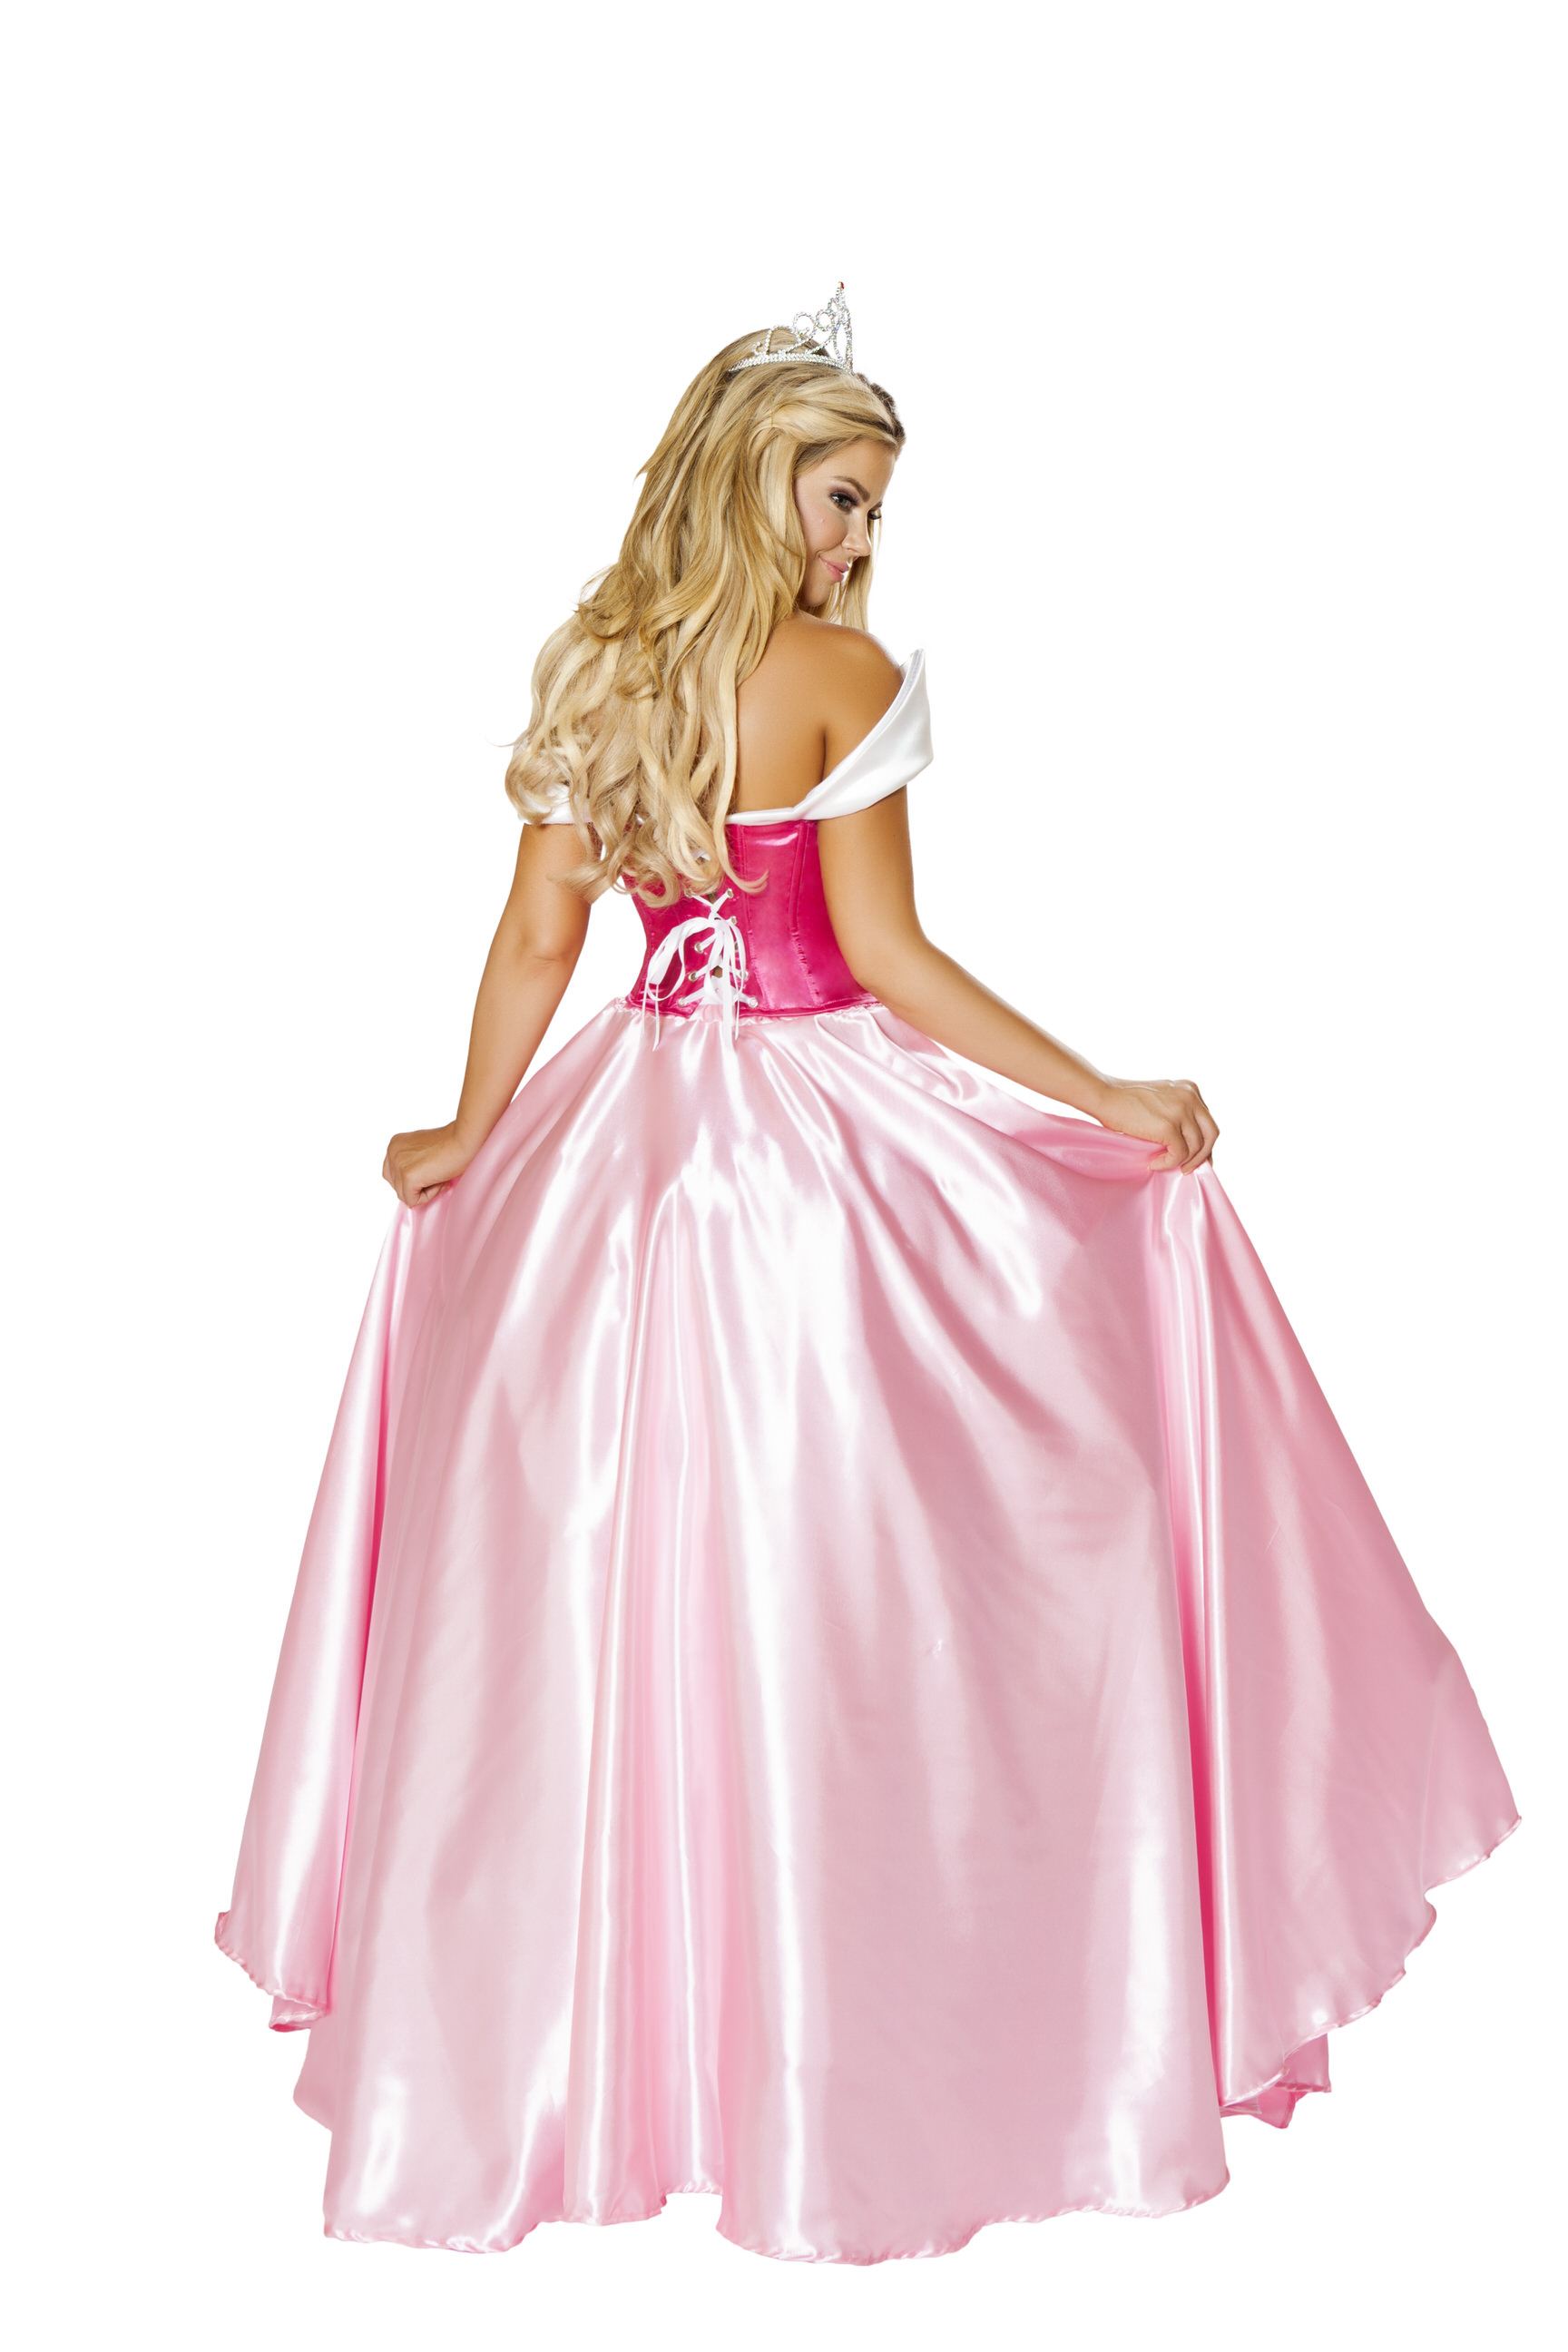 Adult Beautiful Princess Woman Costume | $105.99 | The Costume Land